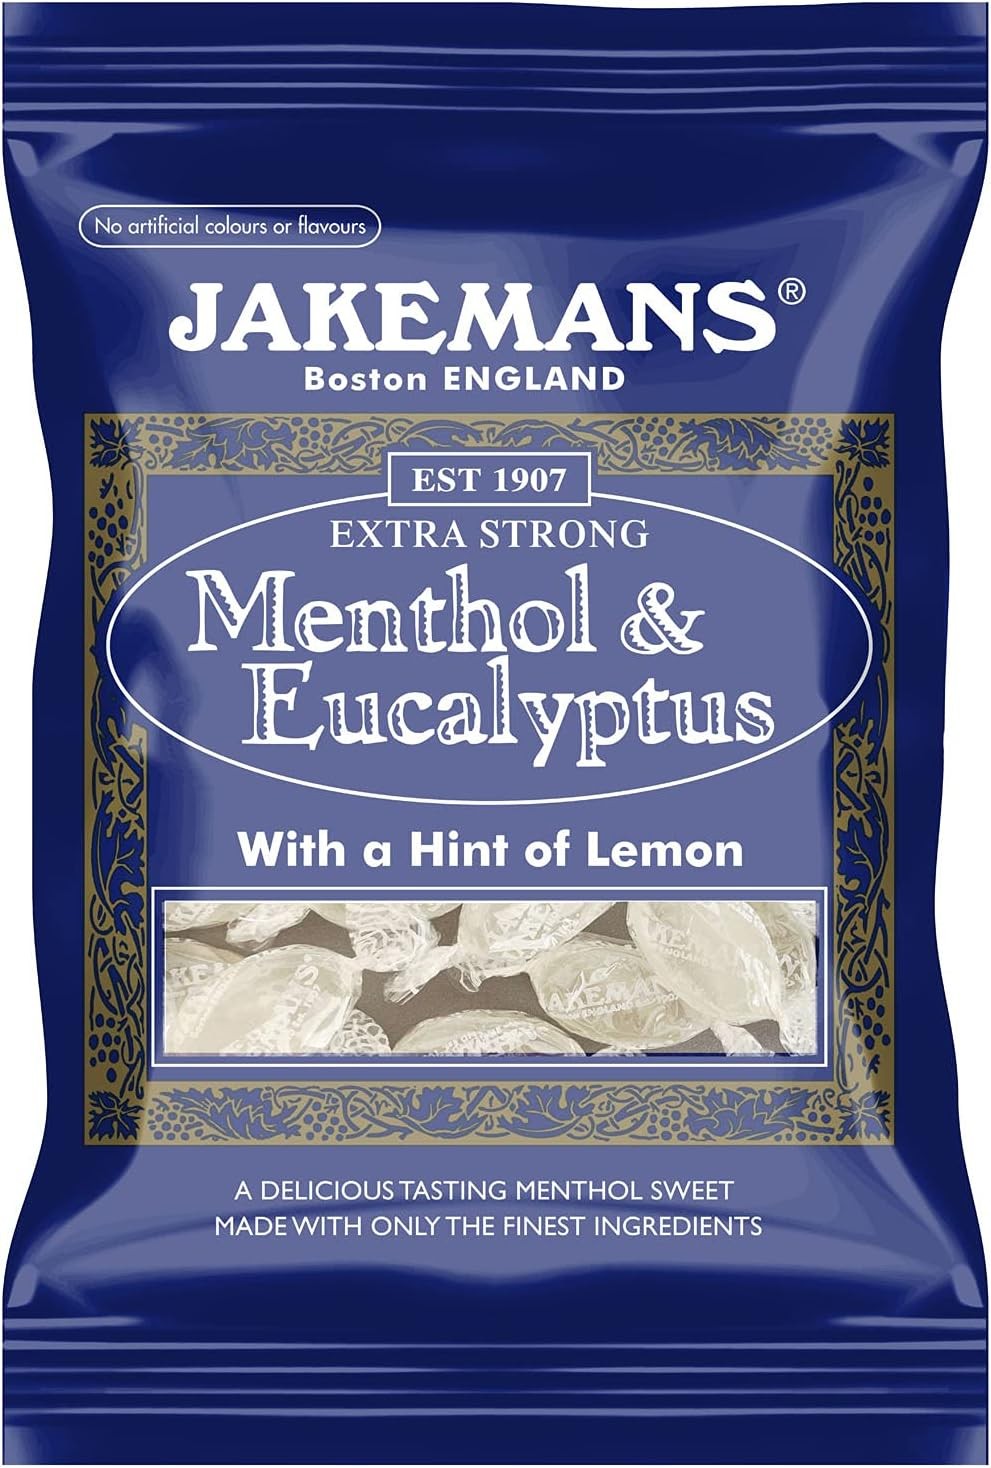 Jakemans Menthol & Eucalyptus with a Hint of Lemon